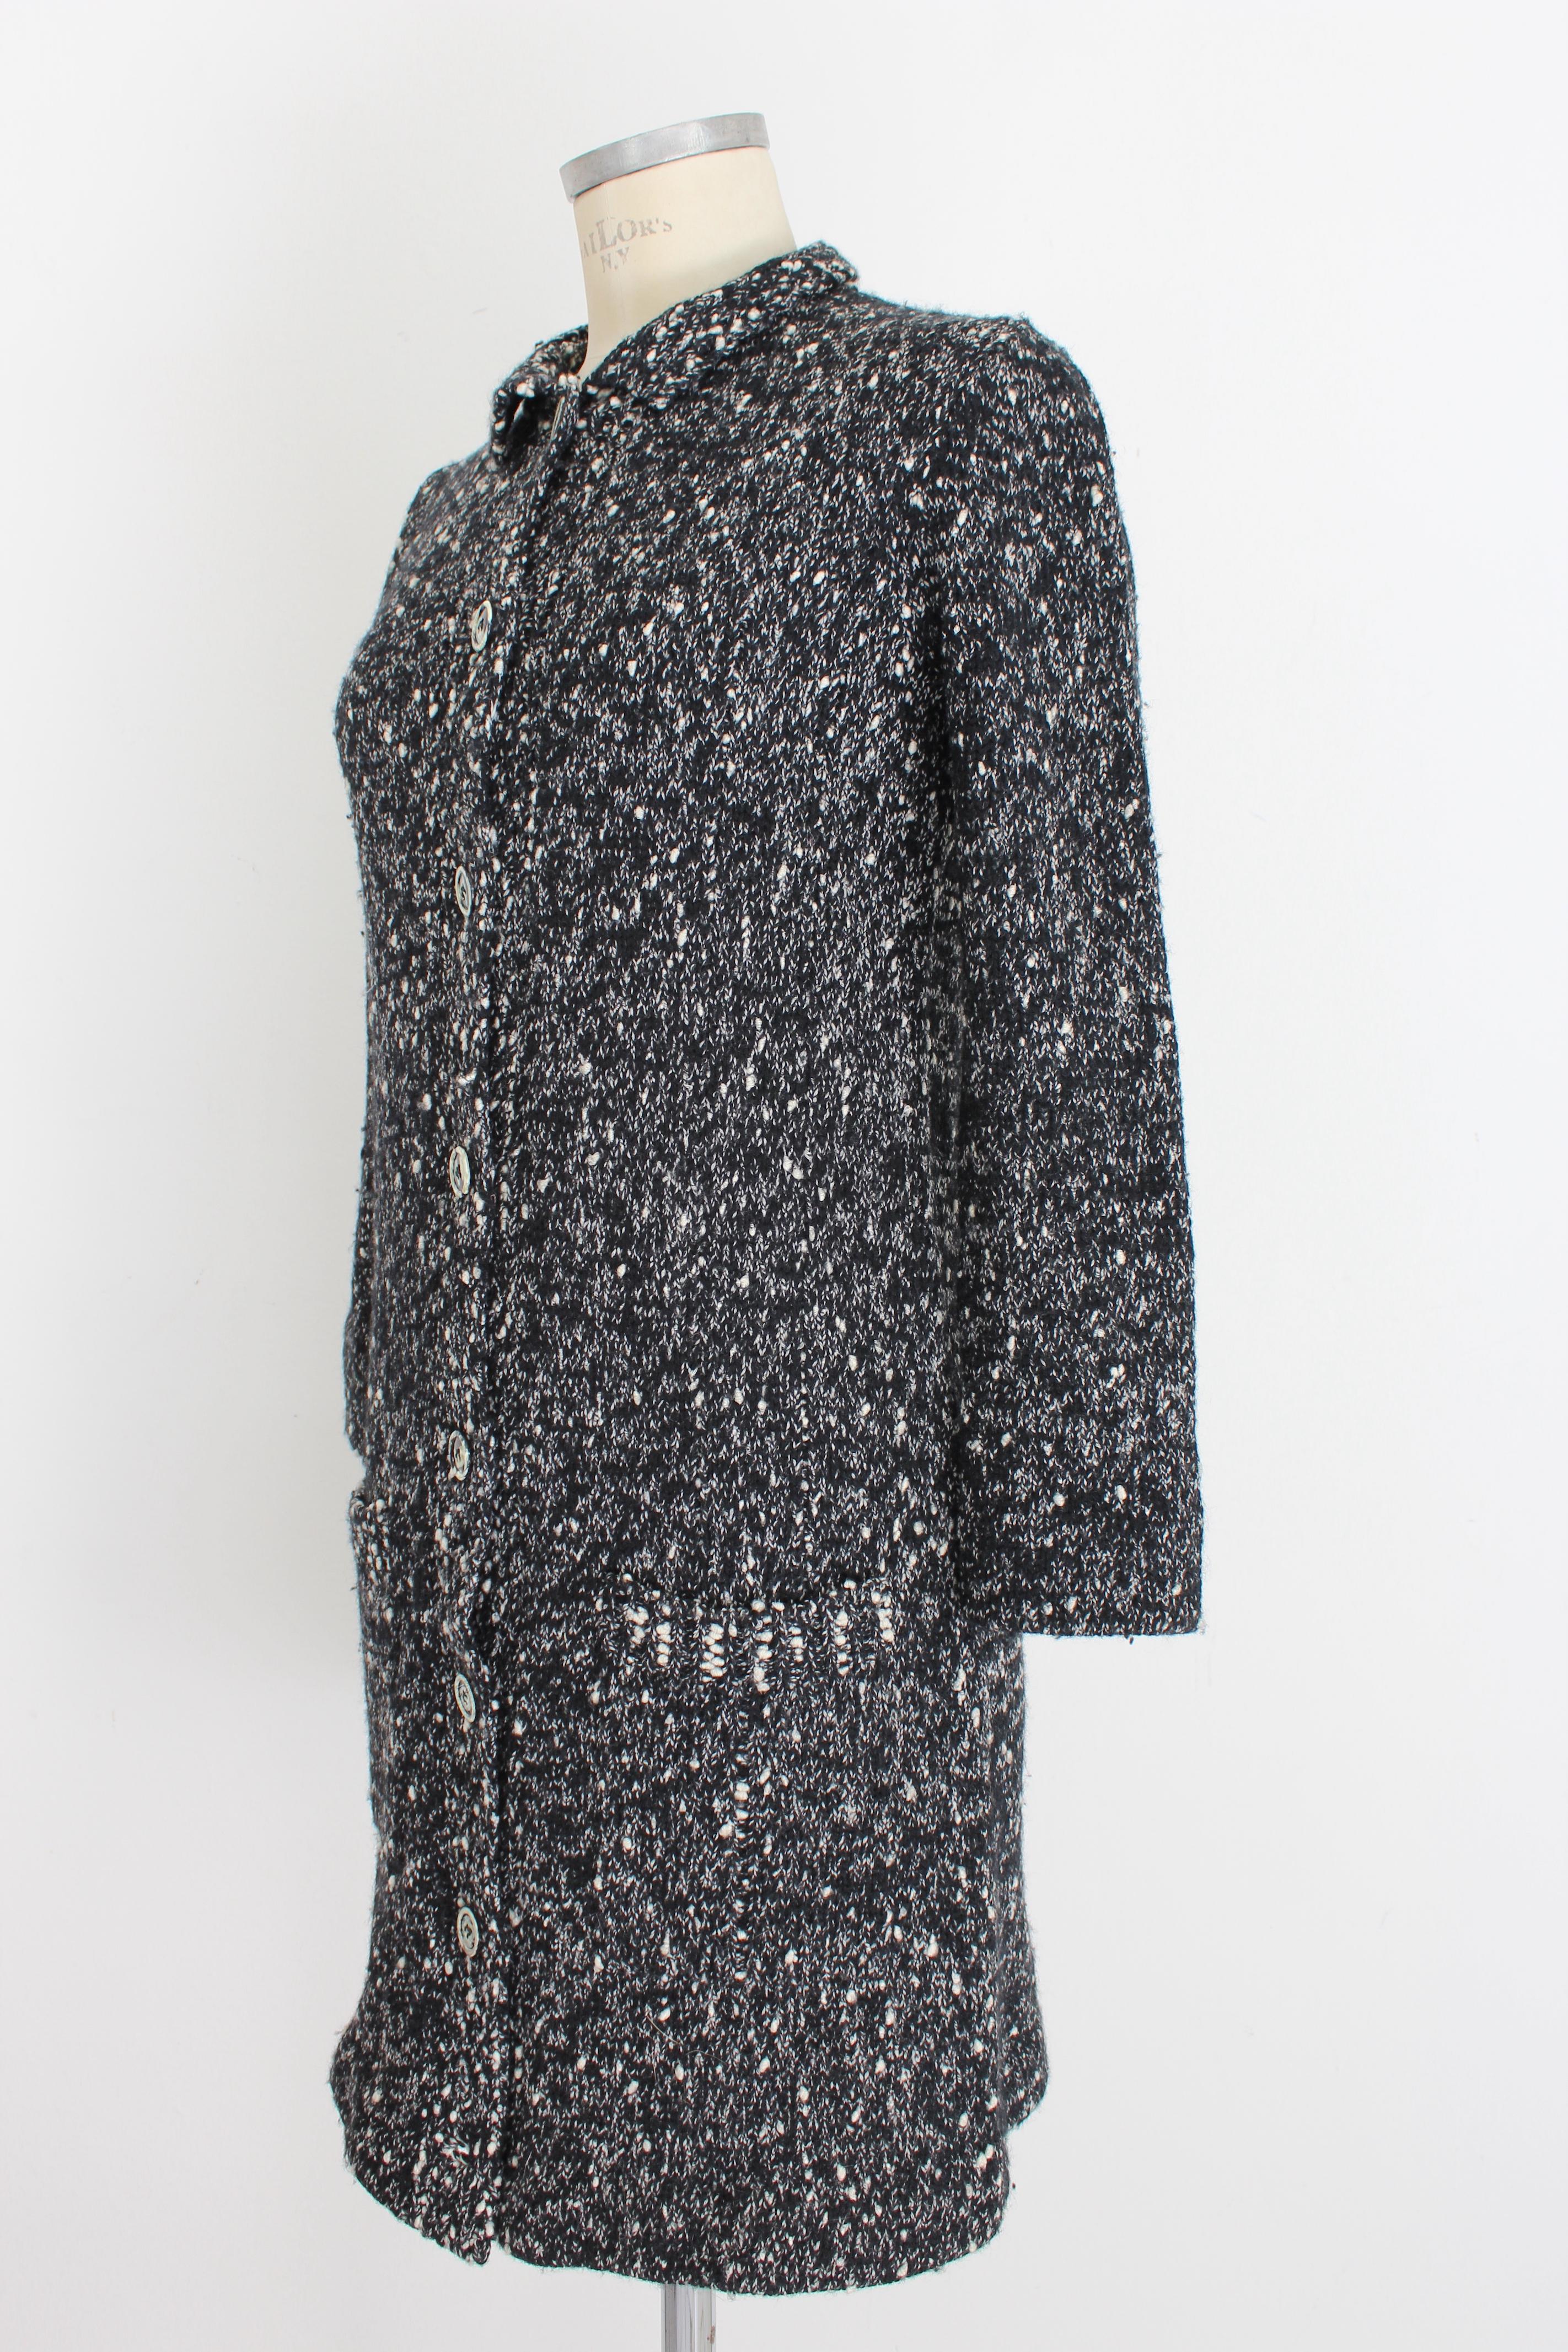 Krizia Black White Wool Sweater Long Jacket For Sale 1